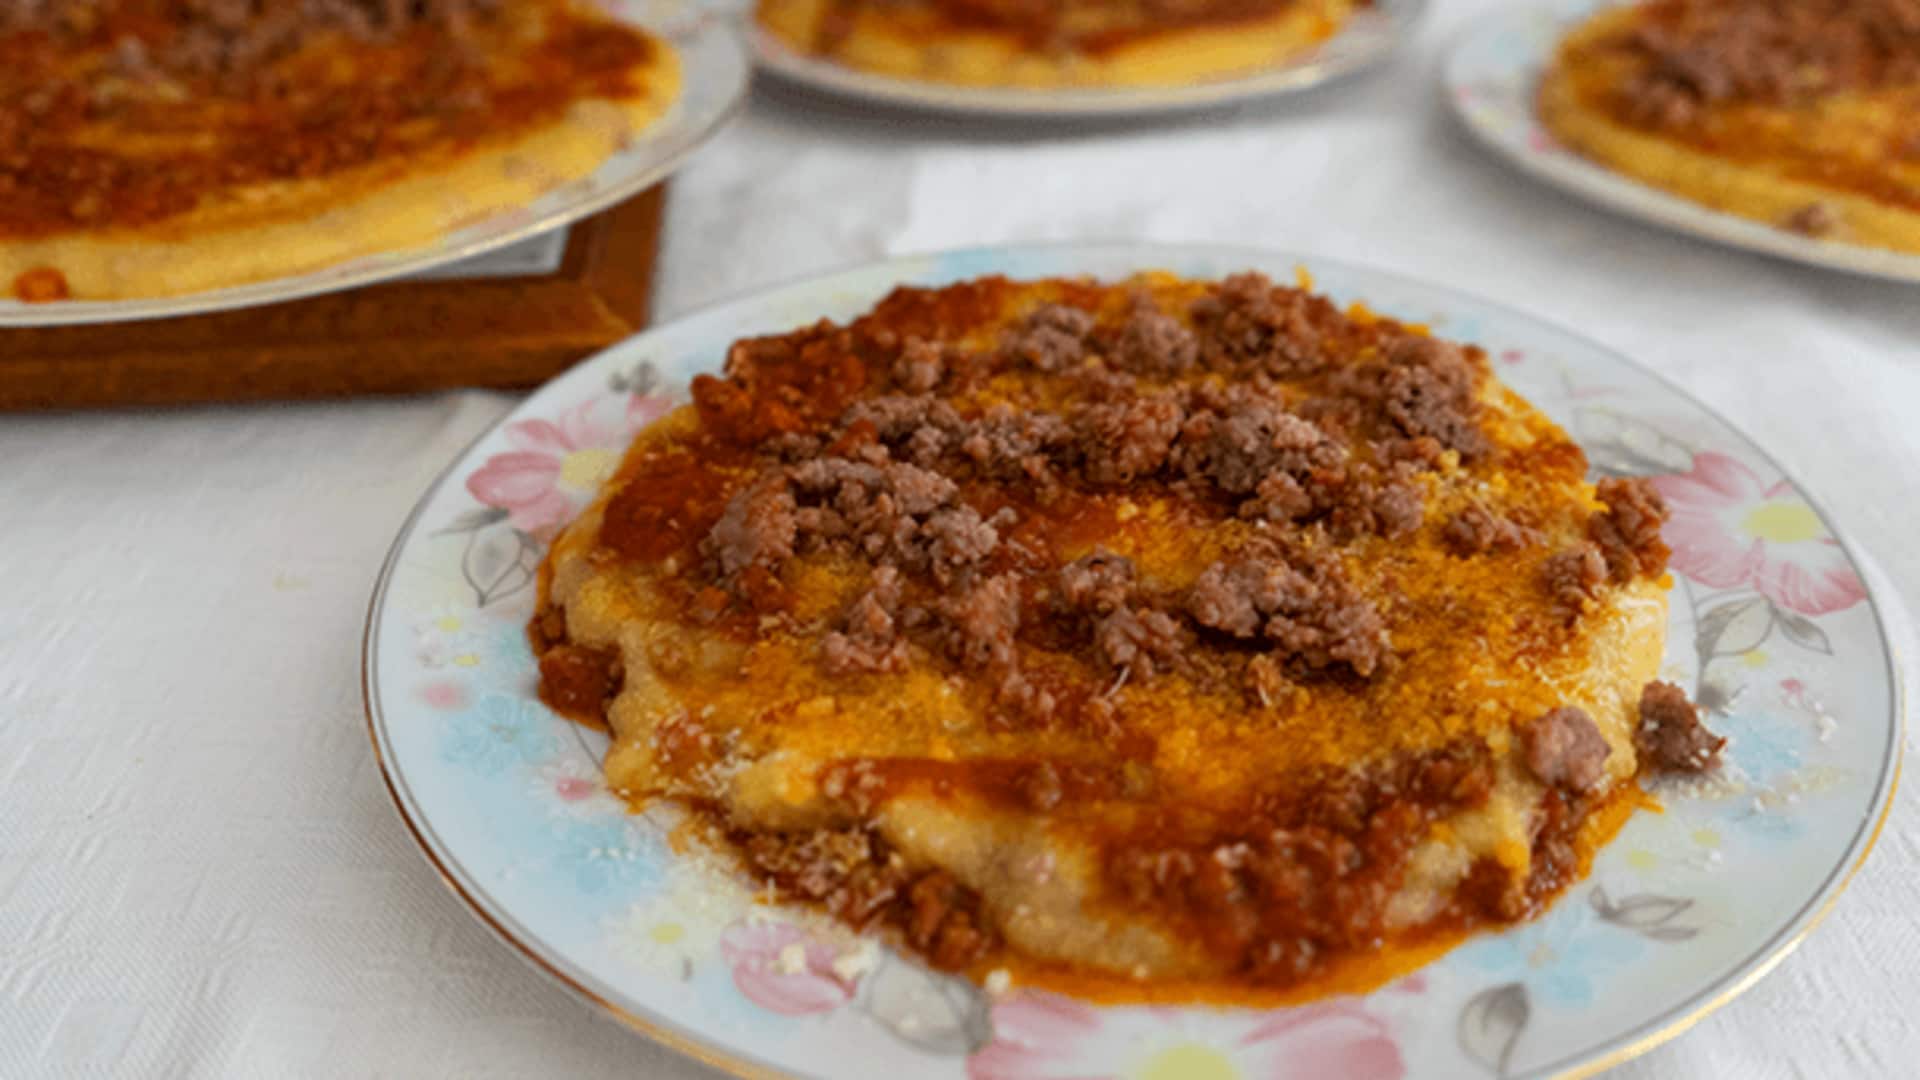 This classic Italian polenta concotta recipe will impress your gift